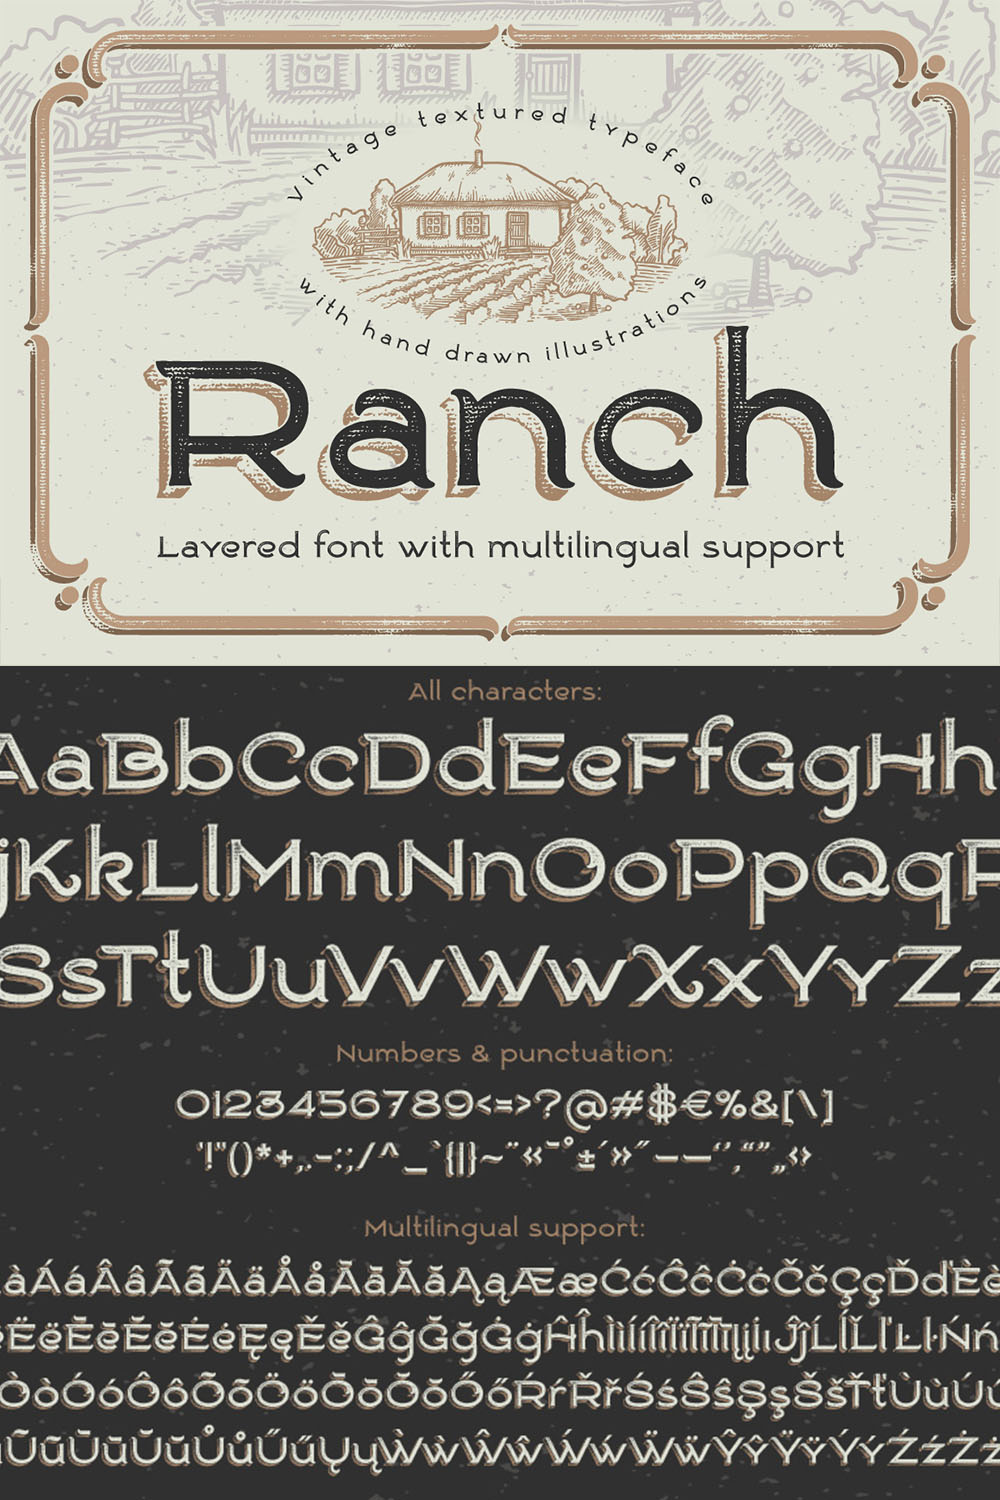 Vintage Typeface Font Ranch and Illustrations pinterest image.